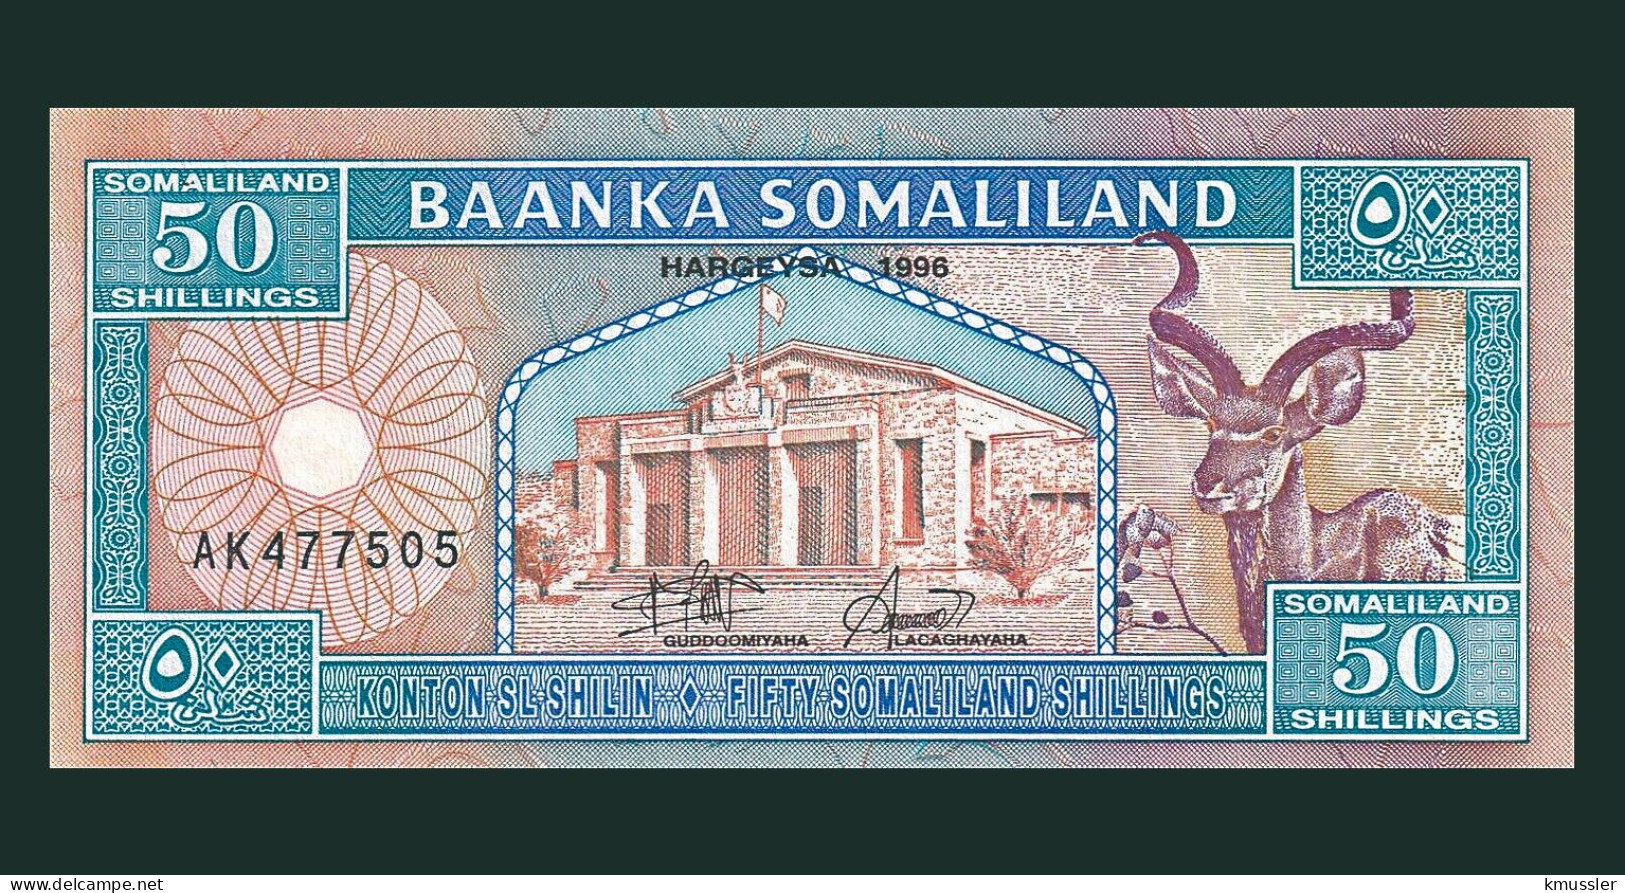 # # # Banknote Aus Somaliland 50 Shillings 1996 (P-7) UNC # # # - Somalia